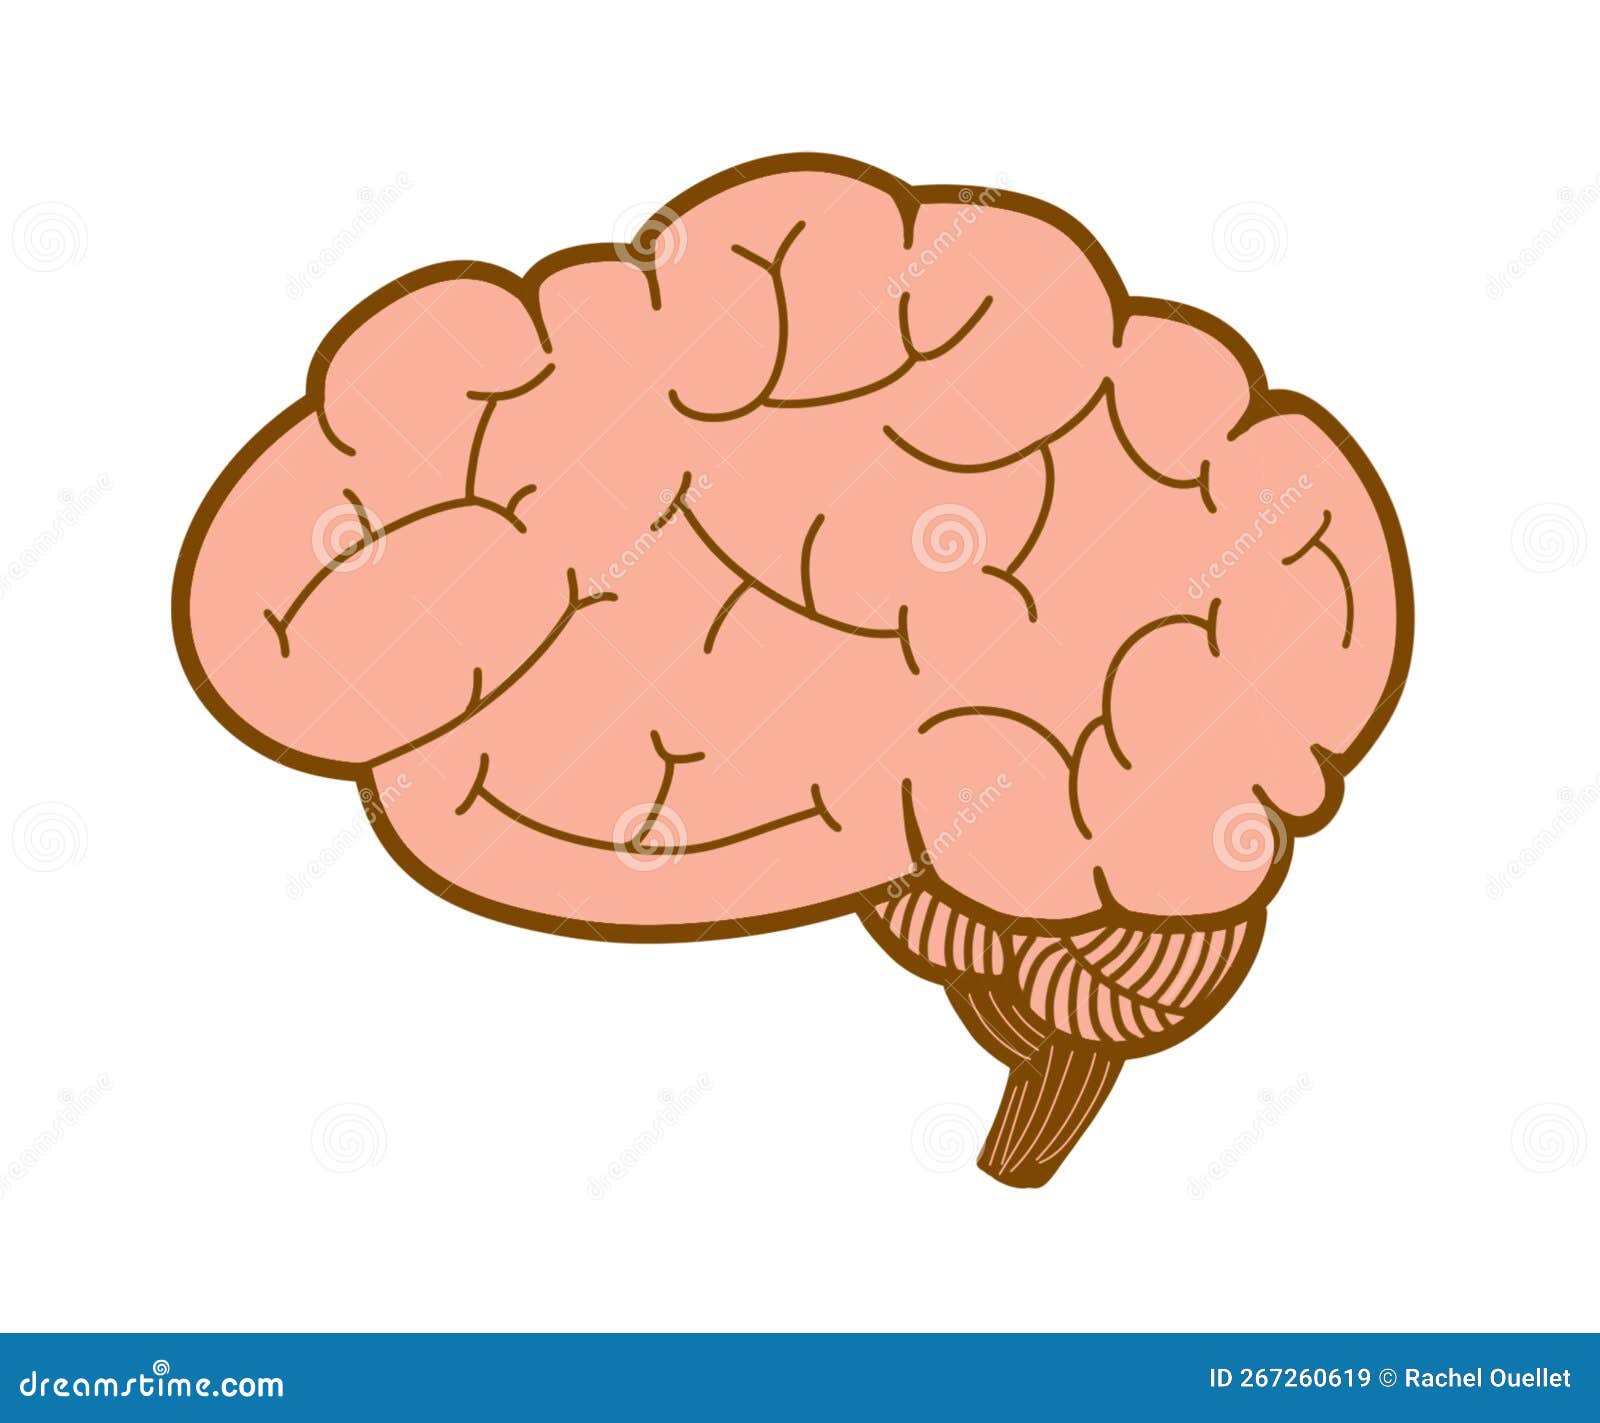 Drawing of a Cartoon Style Brain Stock Illustration - Illustration of ...